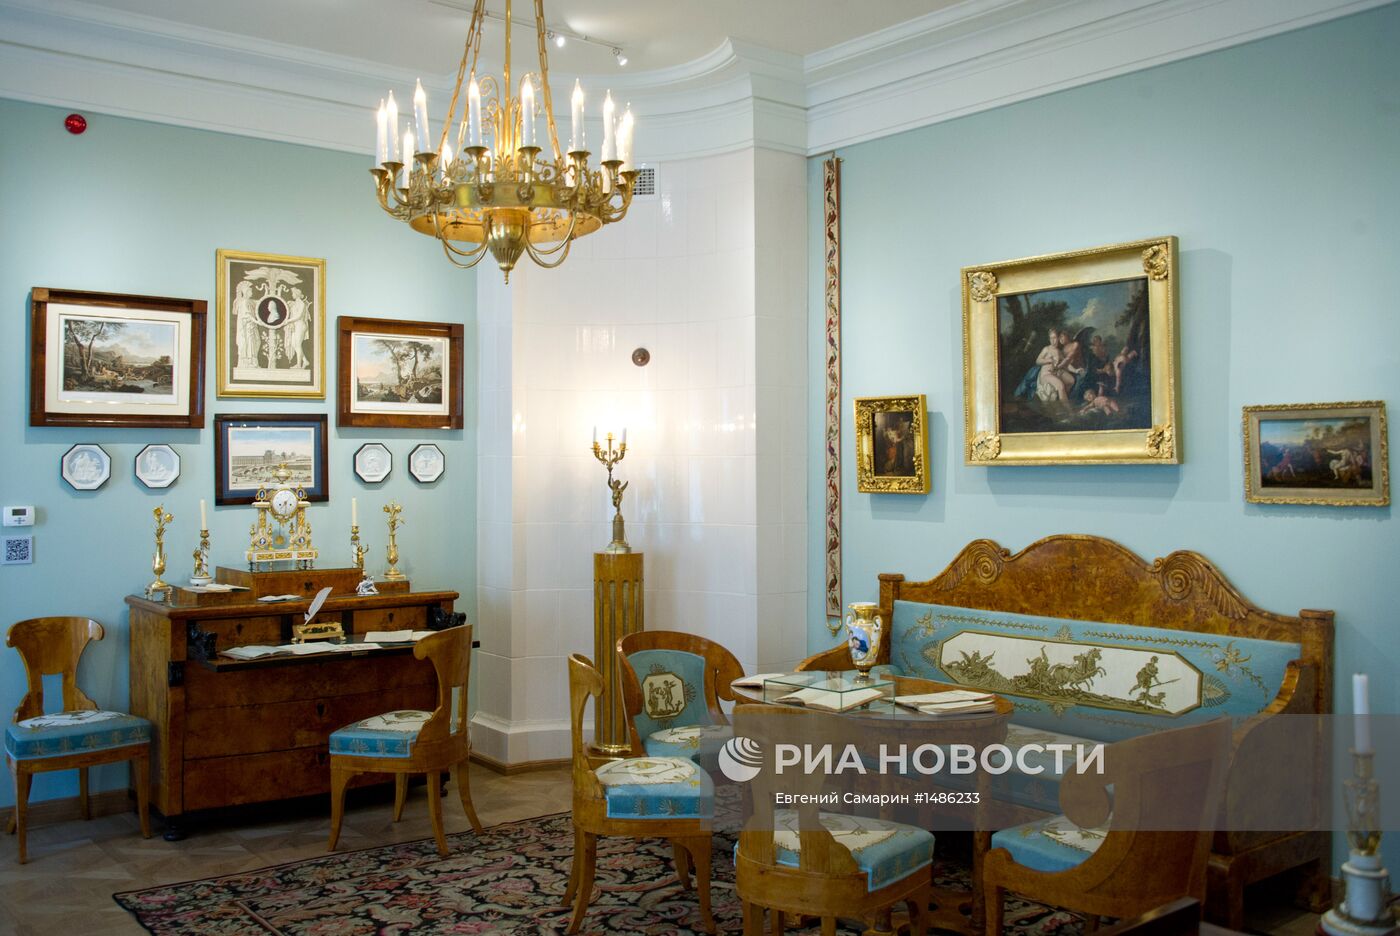 С.Собянин посетил дом-музей В.Л.Пушкина